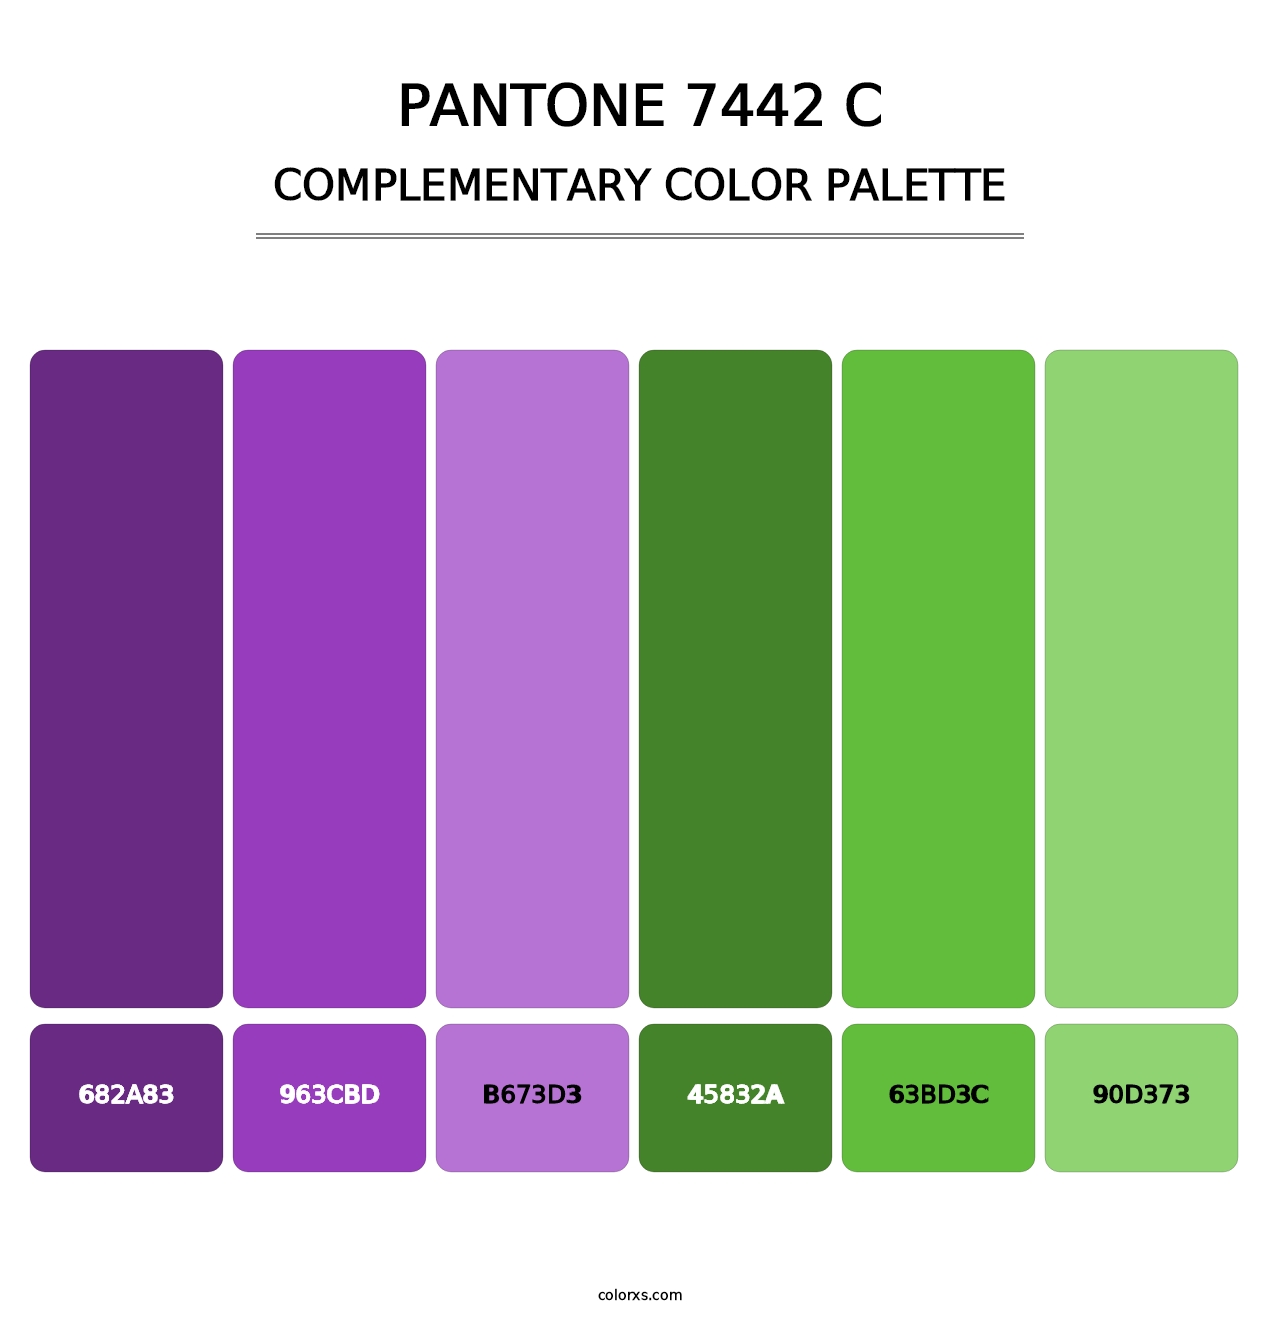 PANTONE 7442 C - Complementary Color Palette